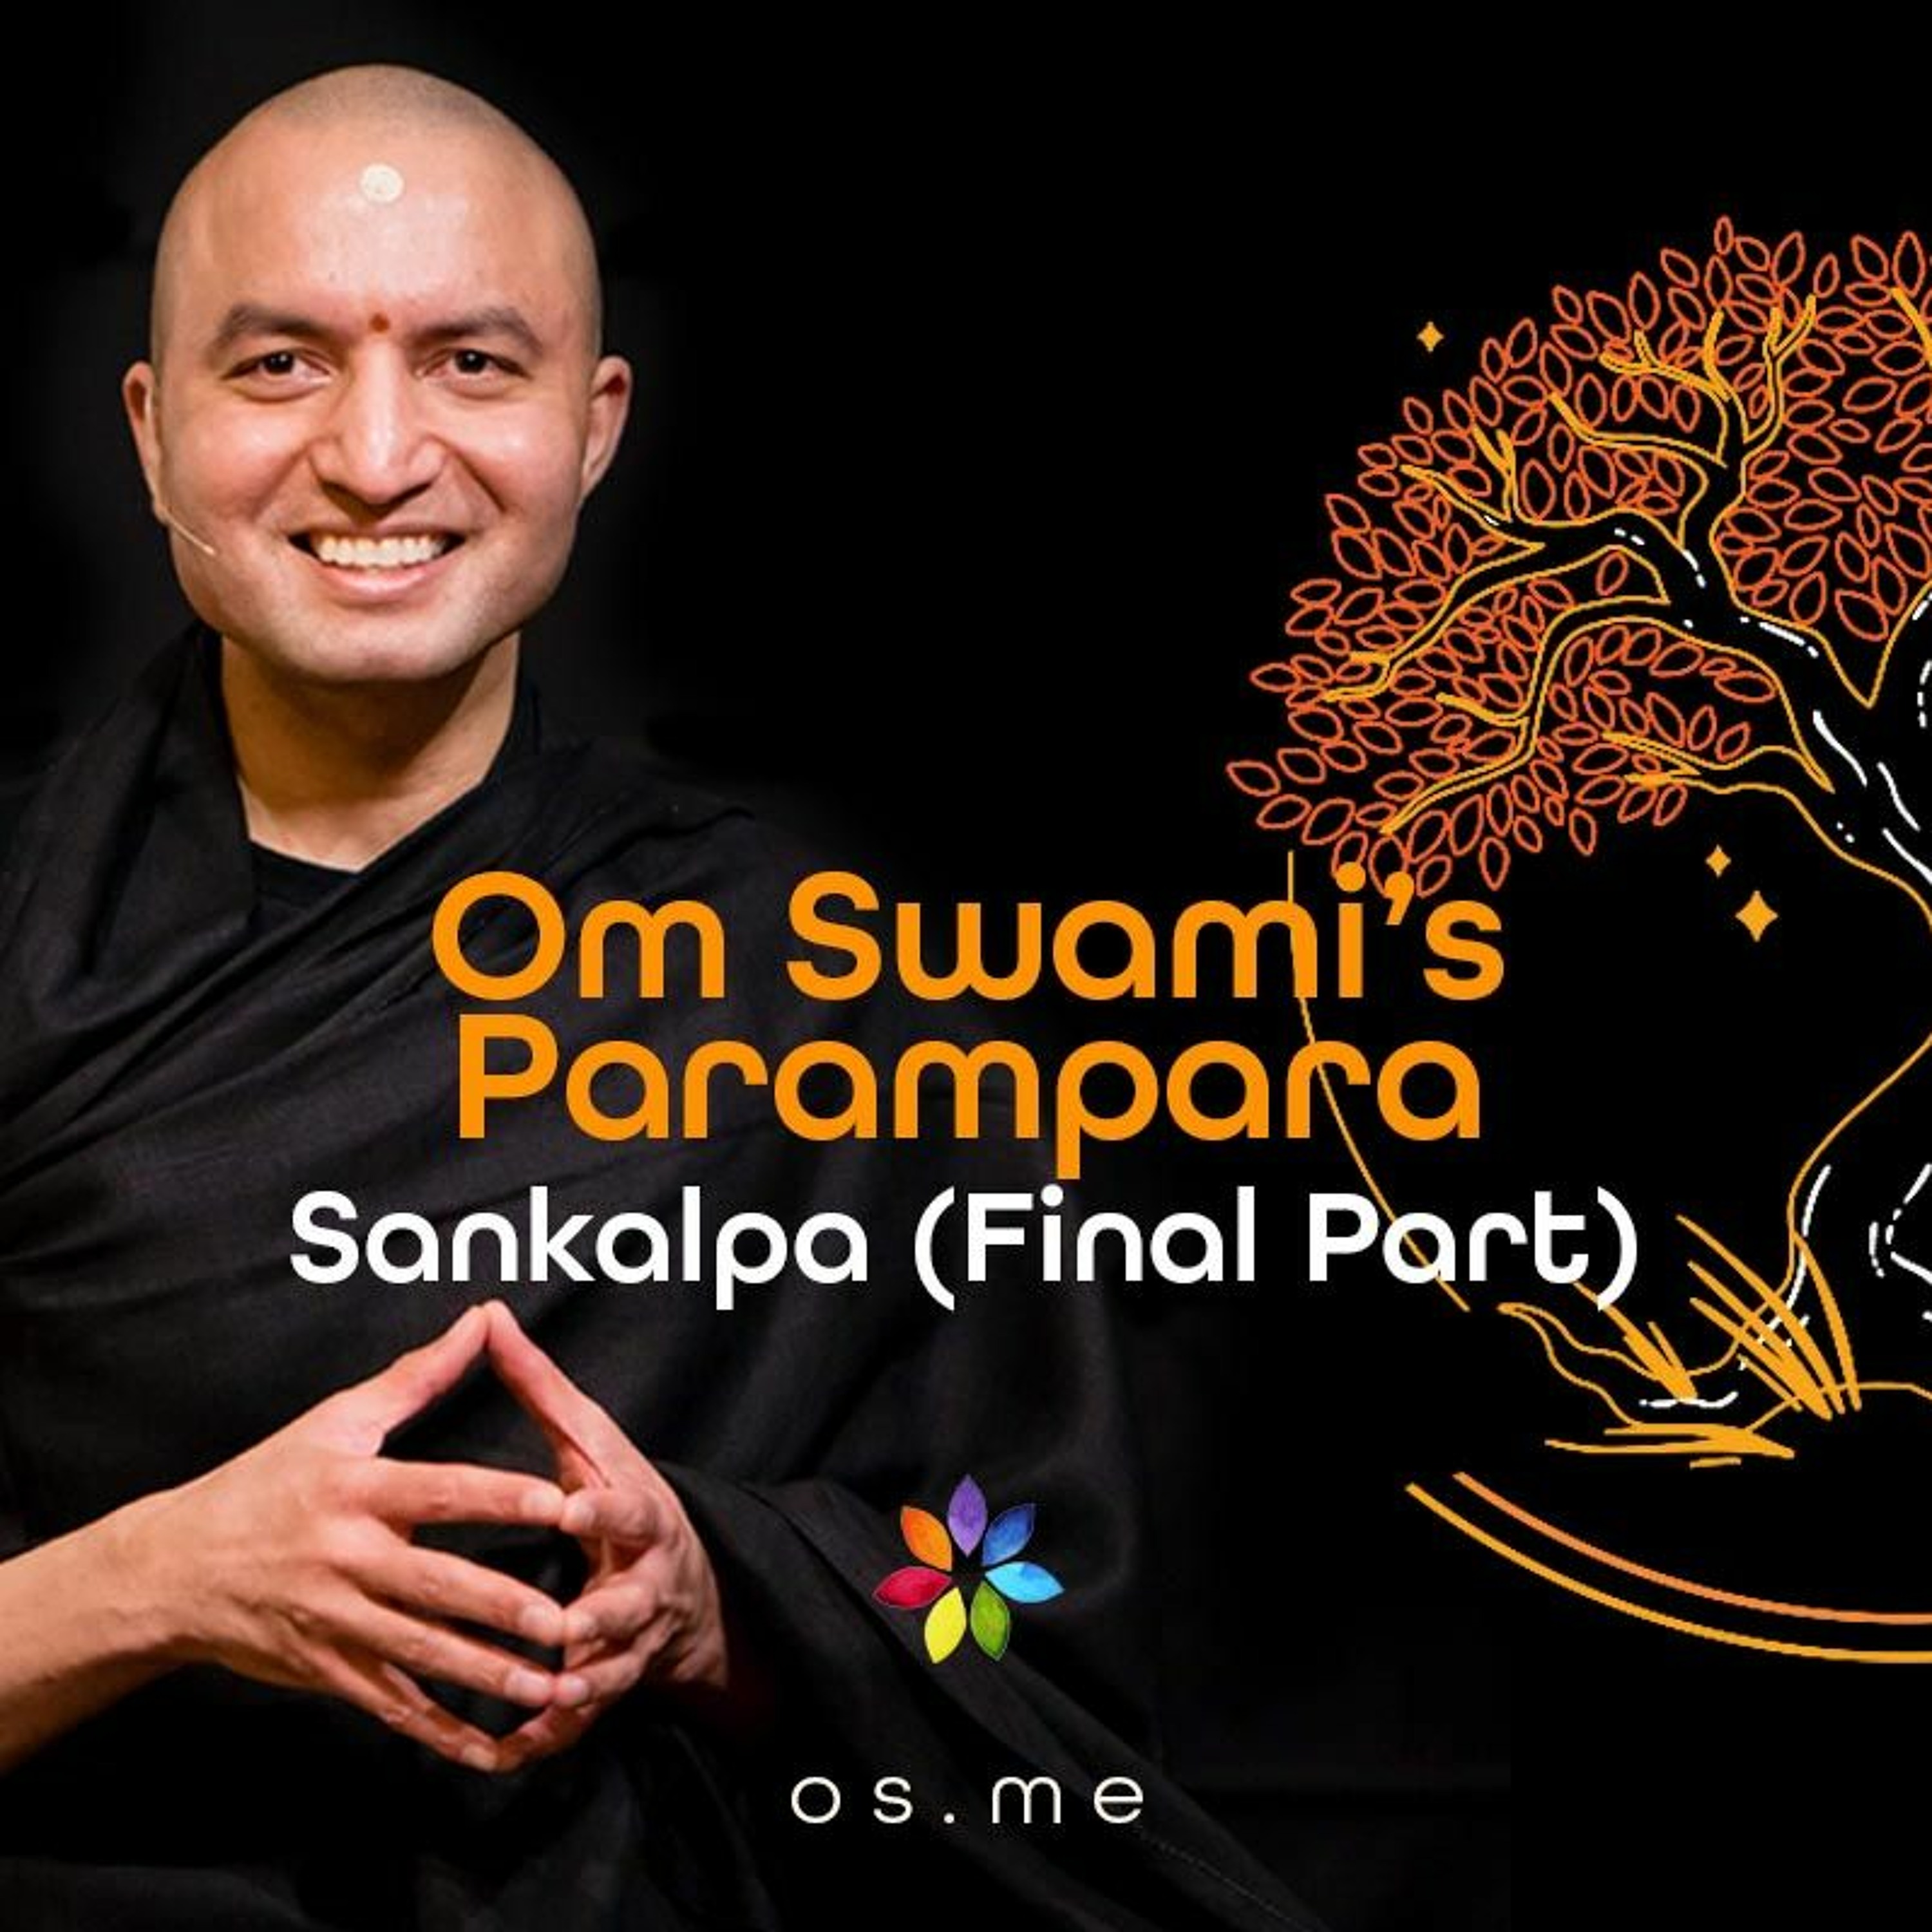 Om Swami’s Parampara (Lineage)- Importance of Sankalpa (Final Part) - [Hindi ]